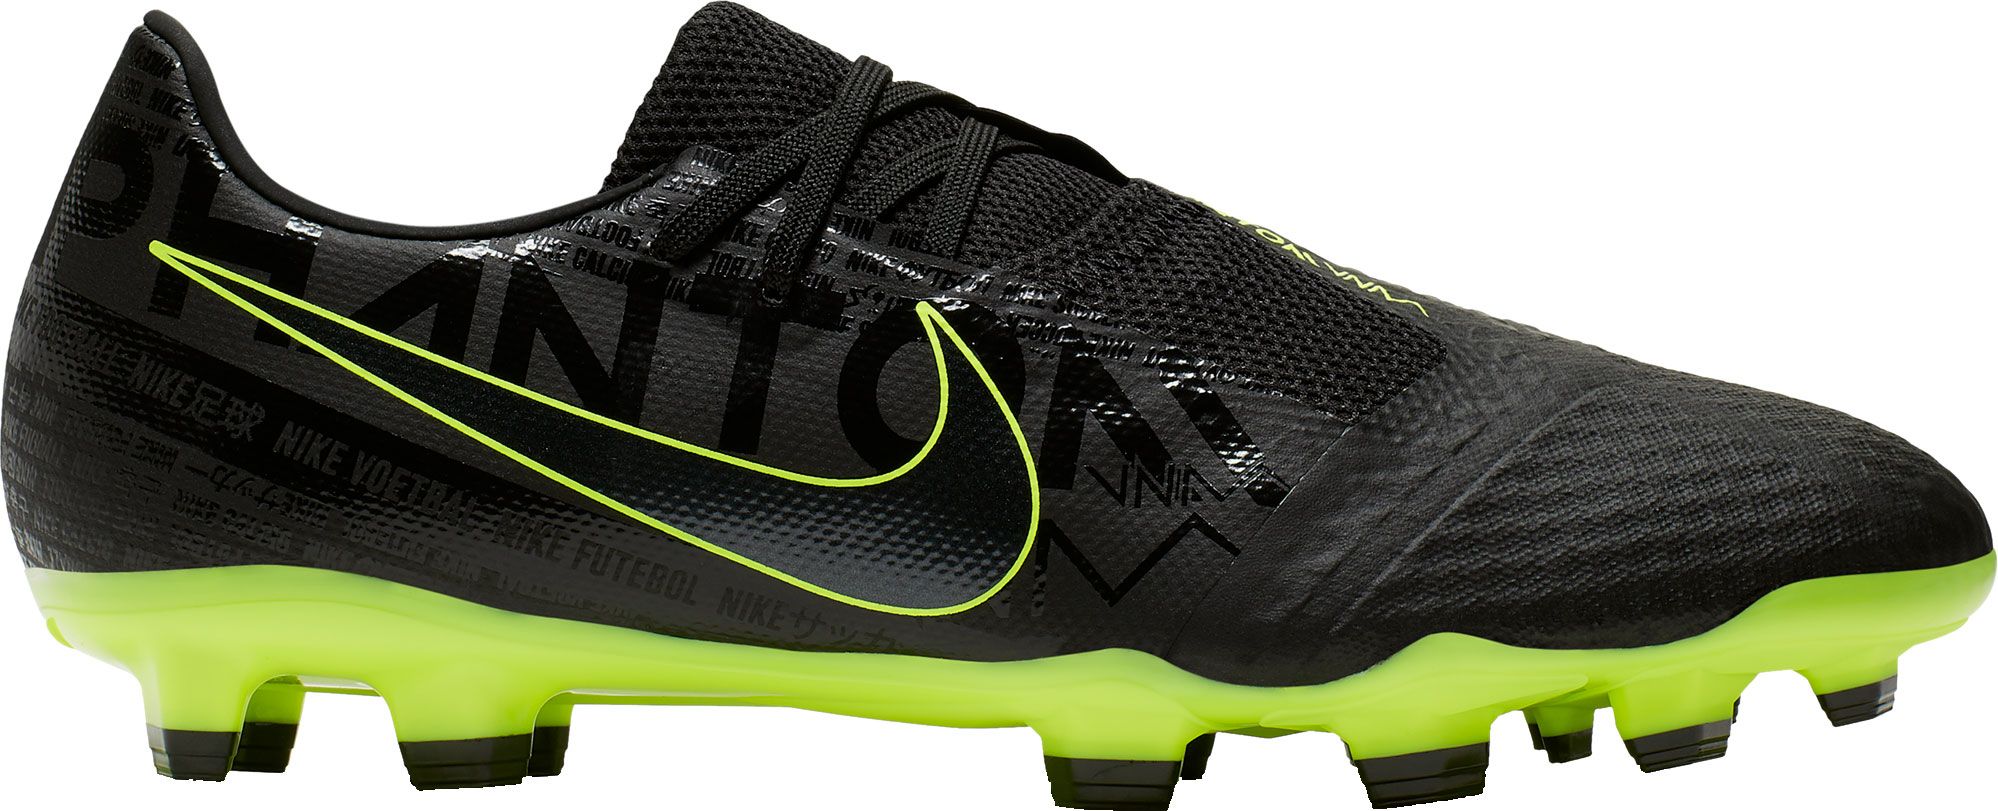 Nike Phantom Venom Club FG Soccer shoes compact grass .